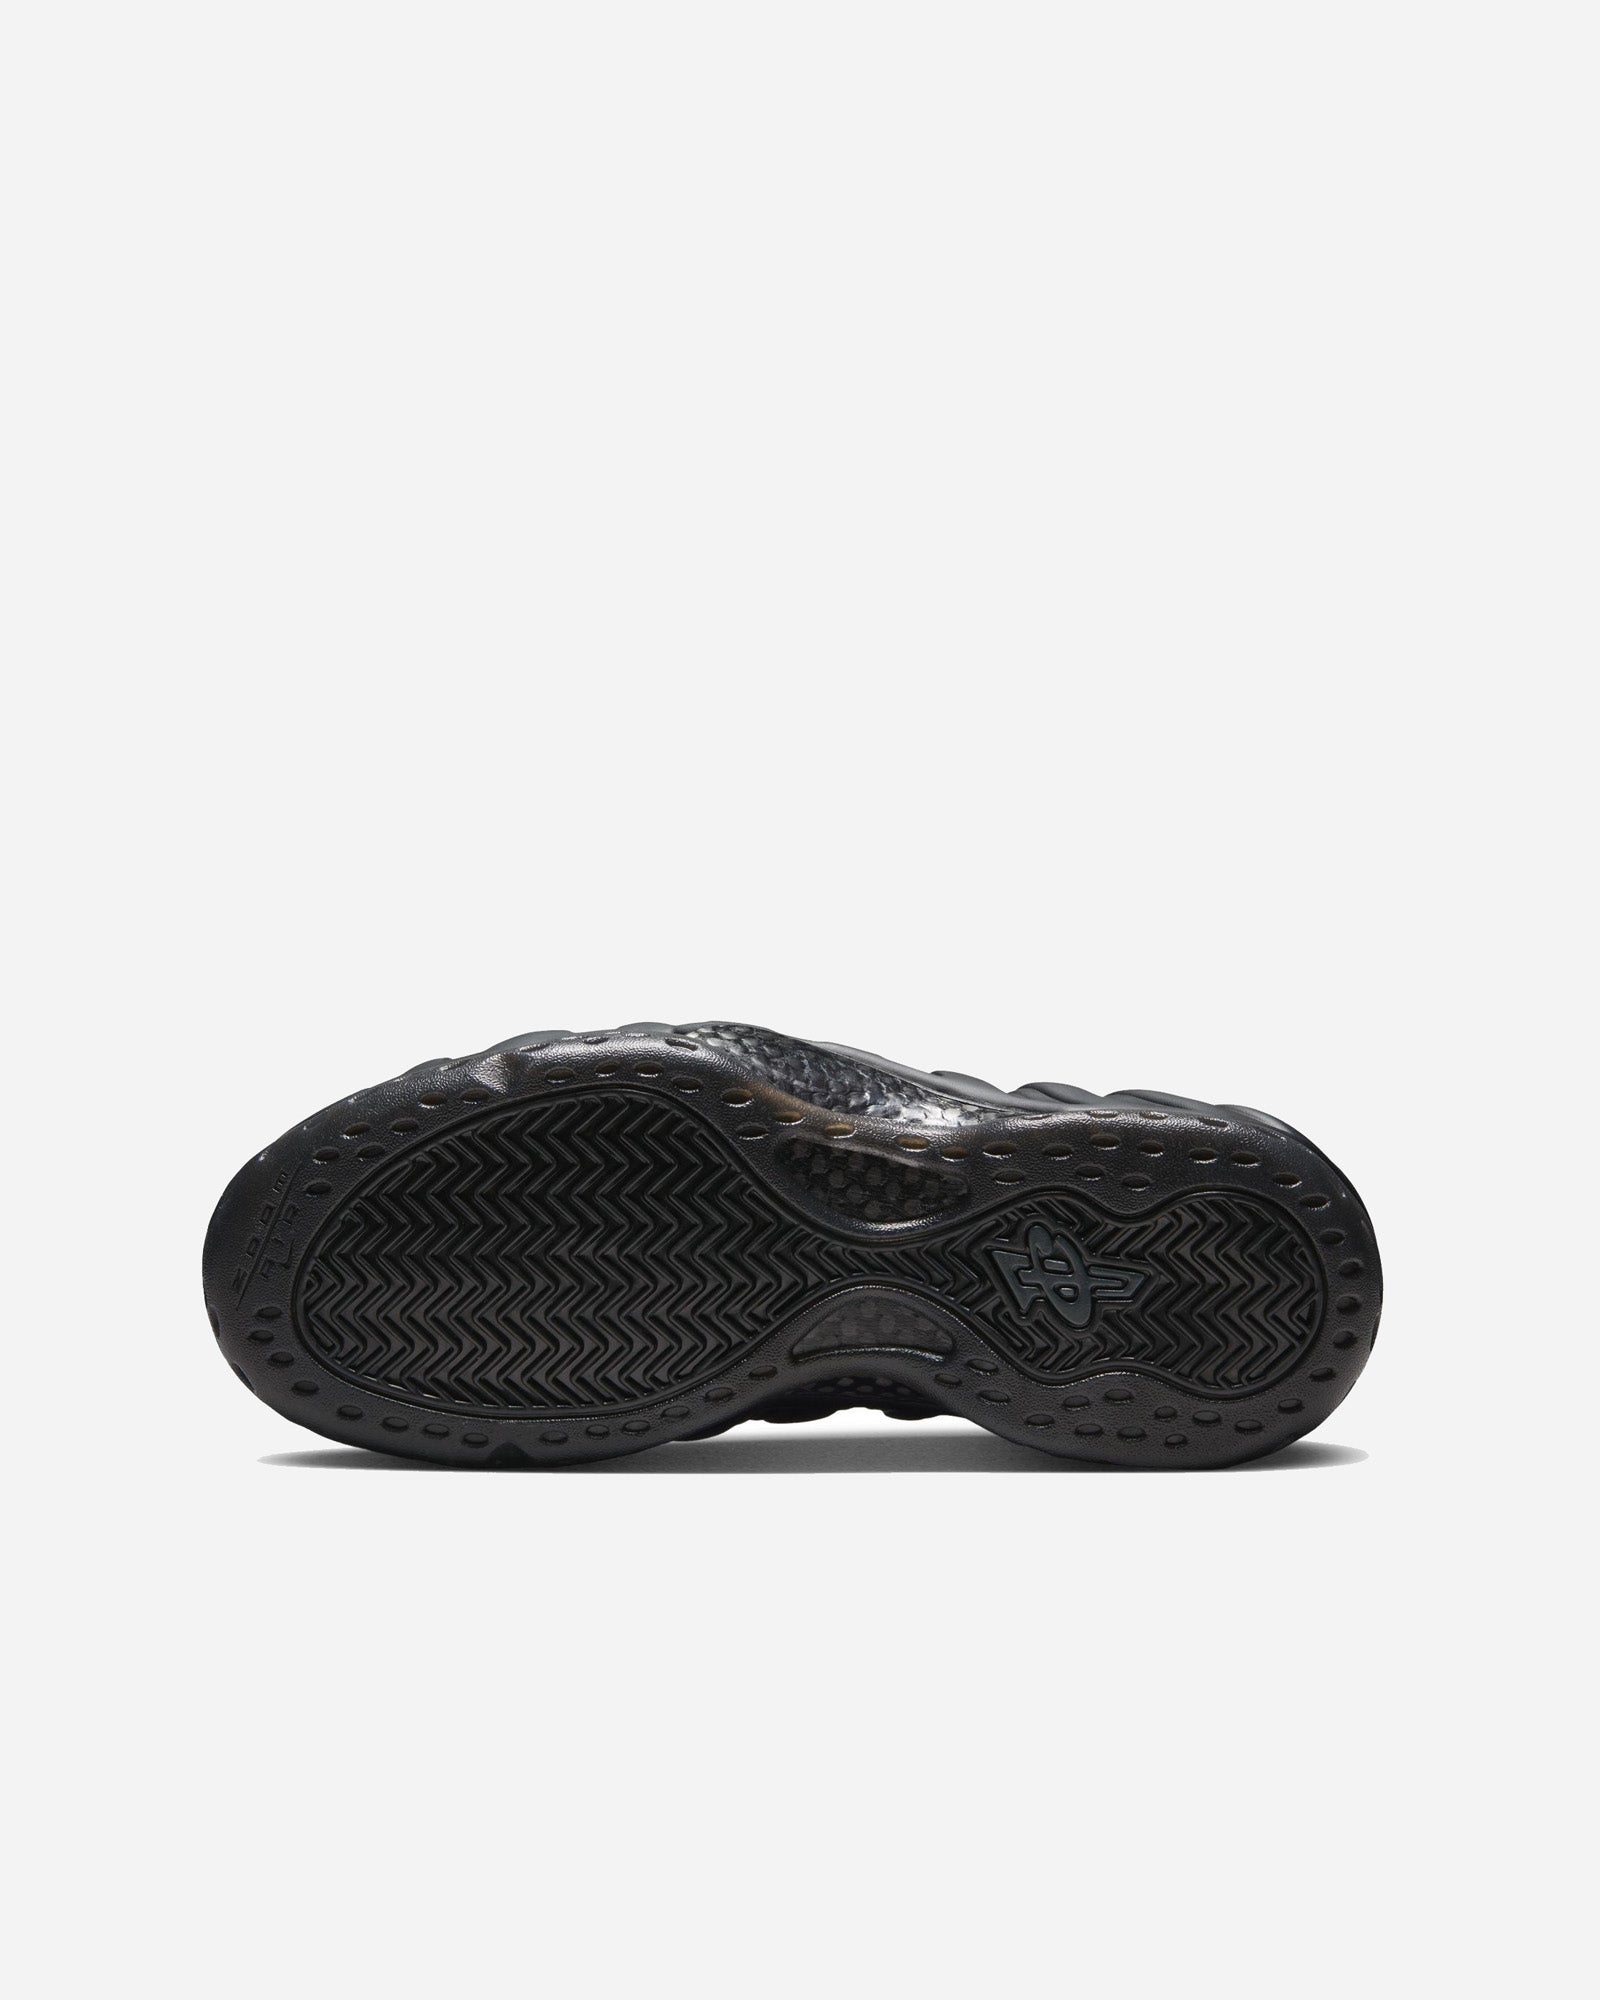 Nike Air Foamposite One "Black" image